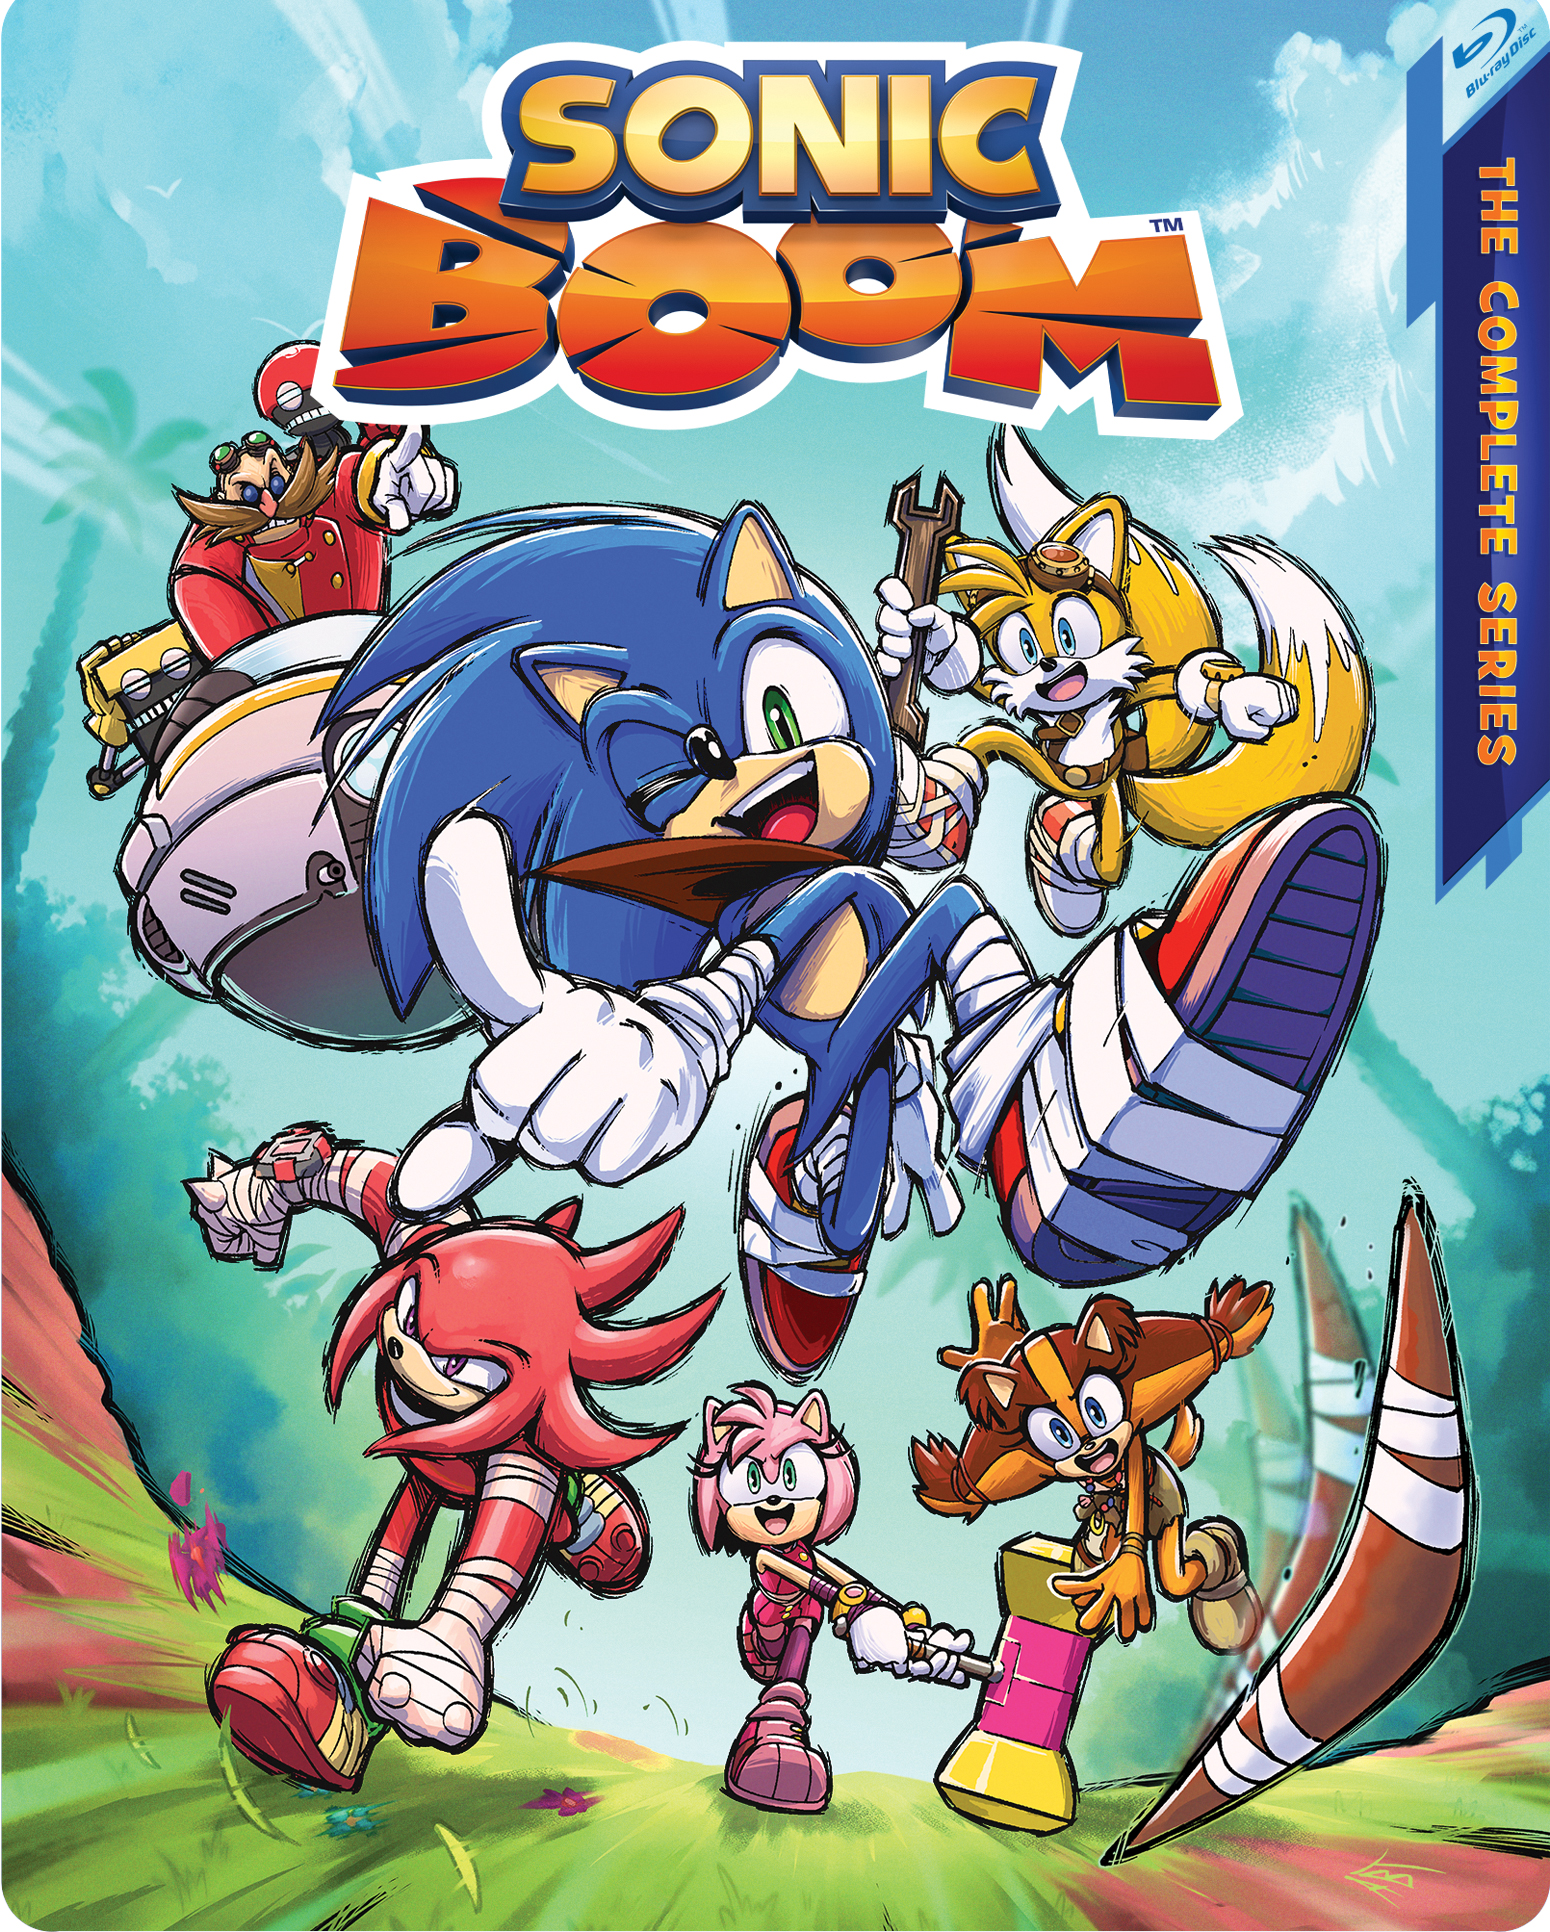 Sonic the Hedgehog [Includes Digital Copy] [Blu-ray] [2020] - Best Buy